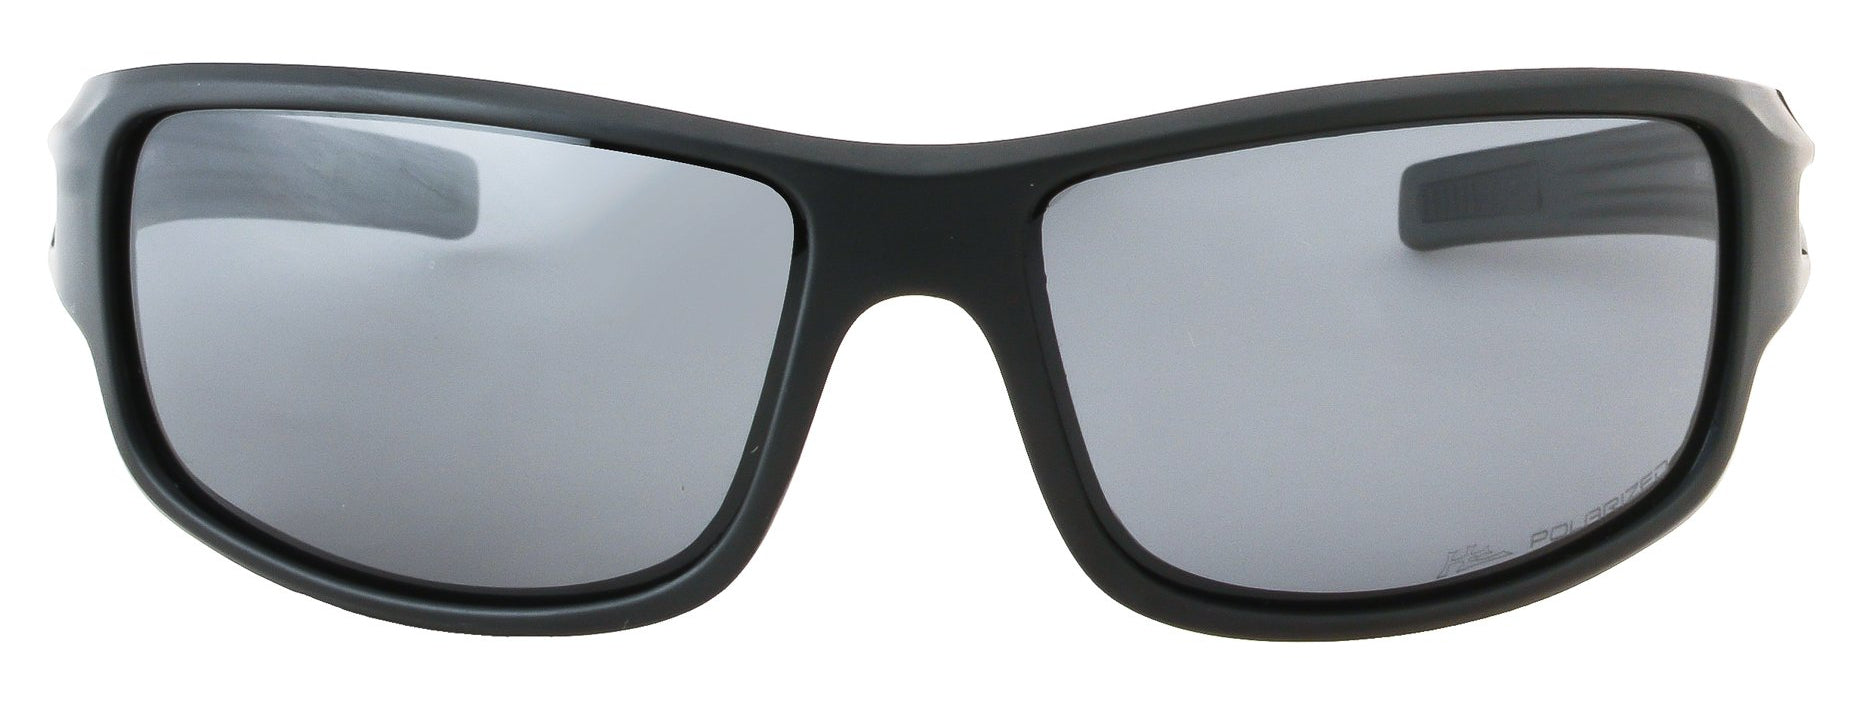 Second image: HZ Series Arkana - Premium Polarized Sunglasses by Hornz - Matte Black Frame - Dark Smoke Lens